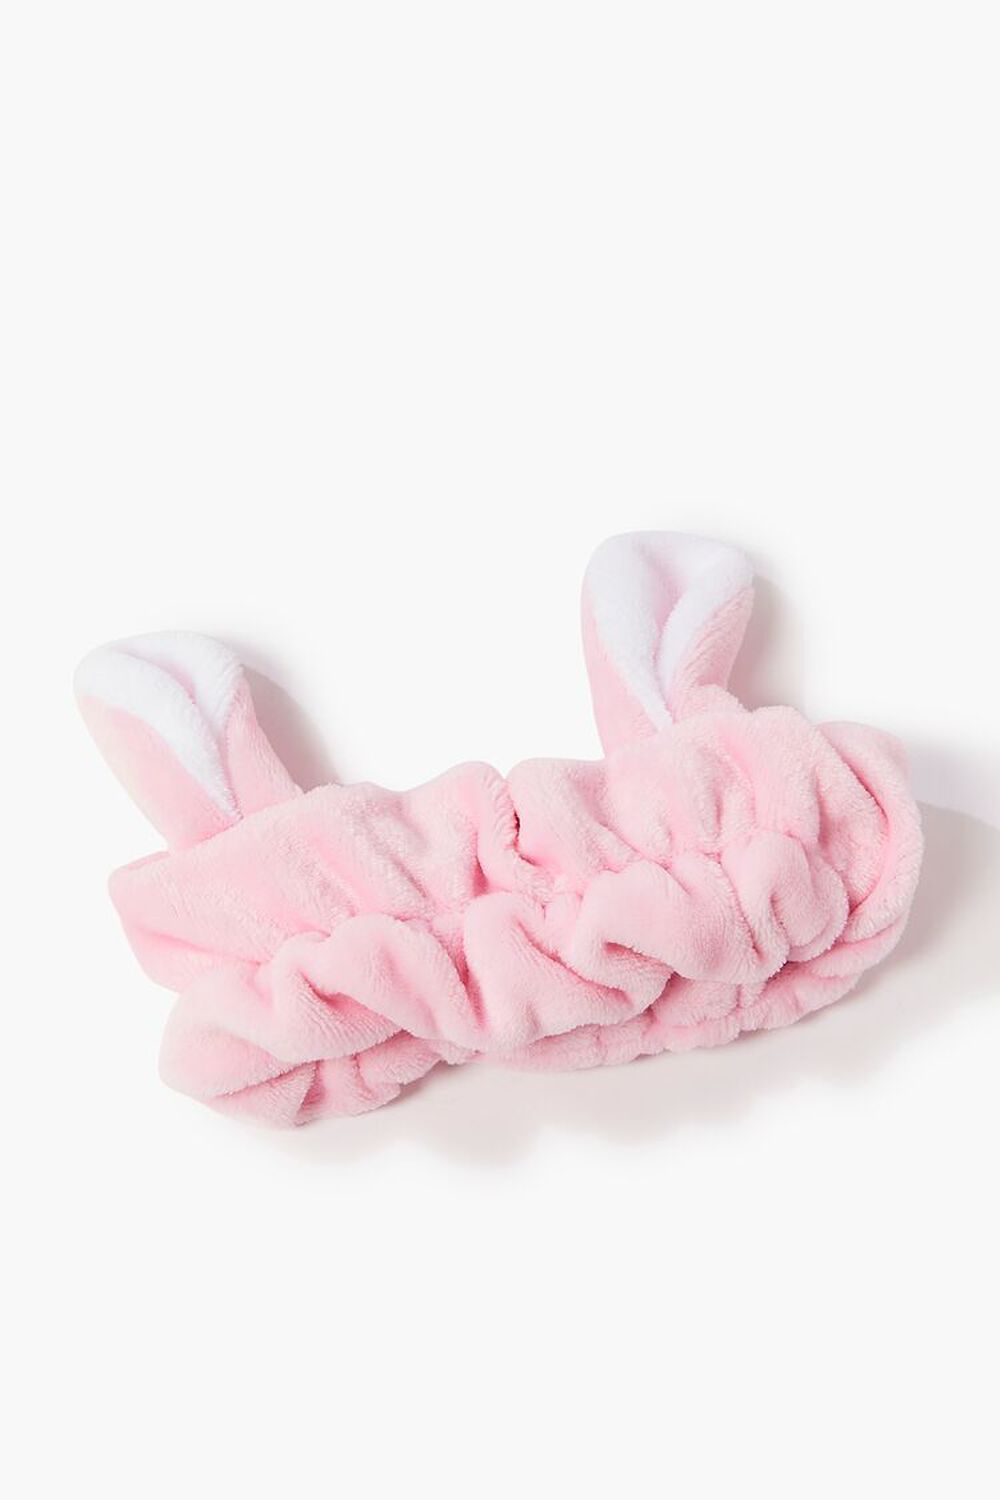 PINK Plush Bunny Ear Headwrap, image 1